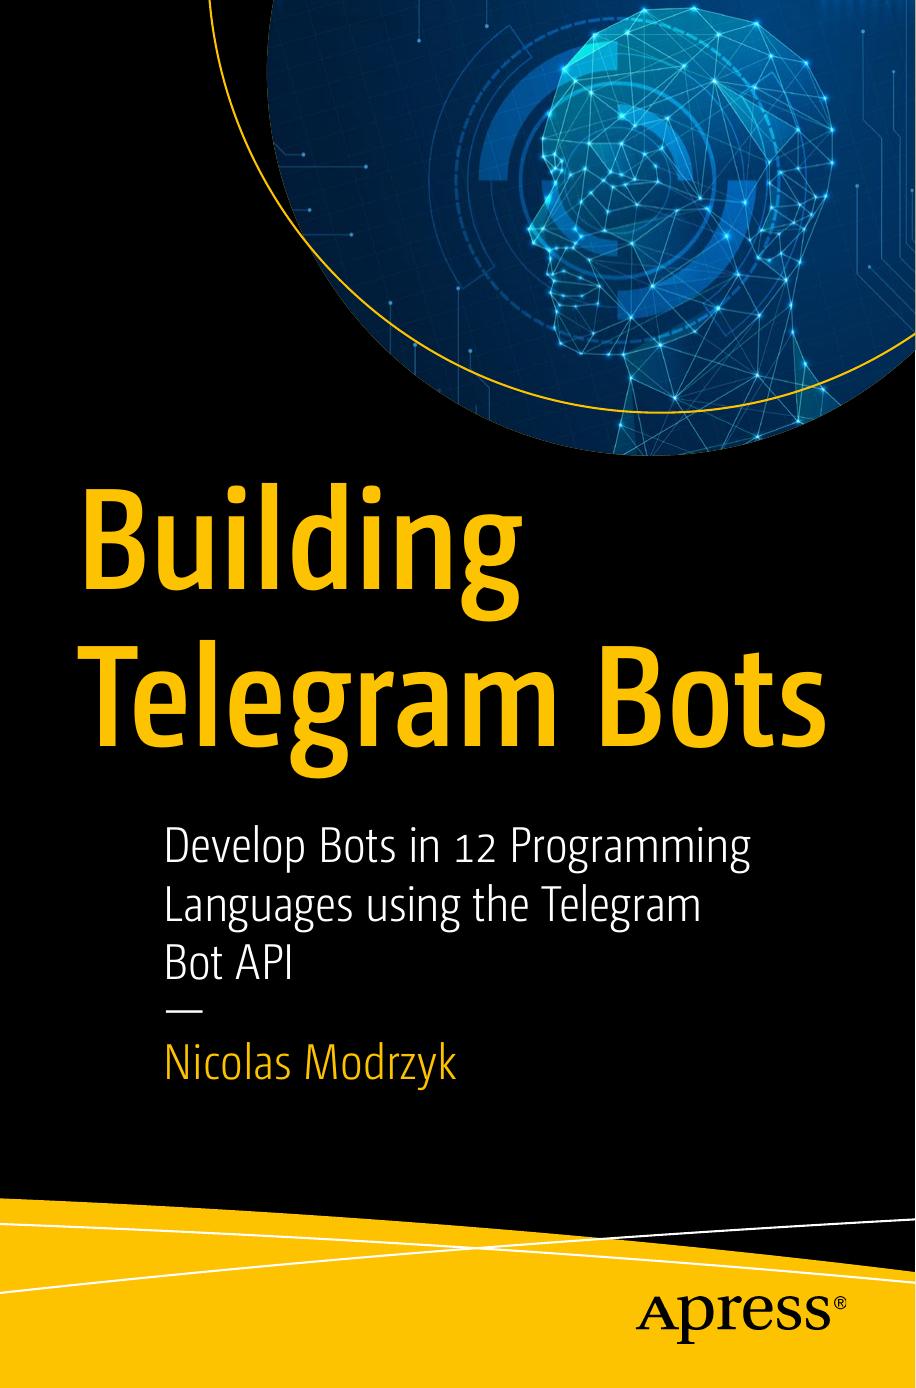 Building Telegram Bots: Develop Bots in 12 Programming Languages Using the Telegram Bot API